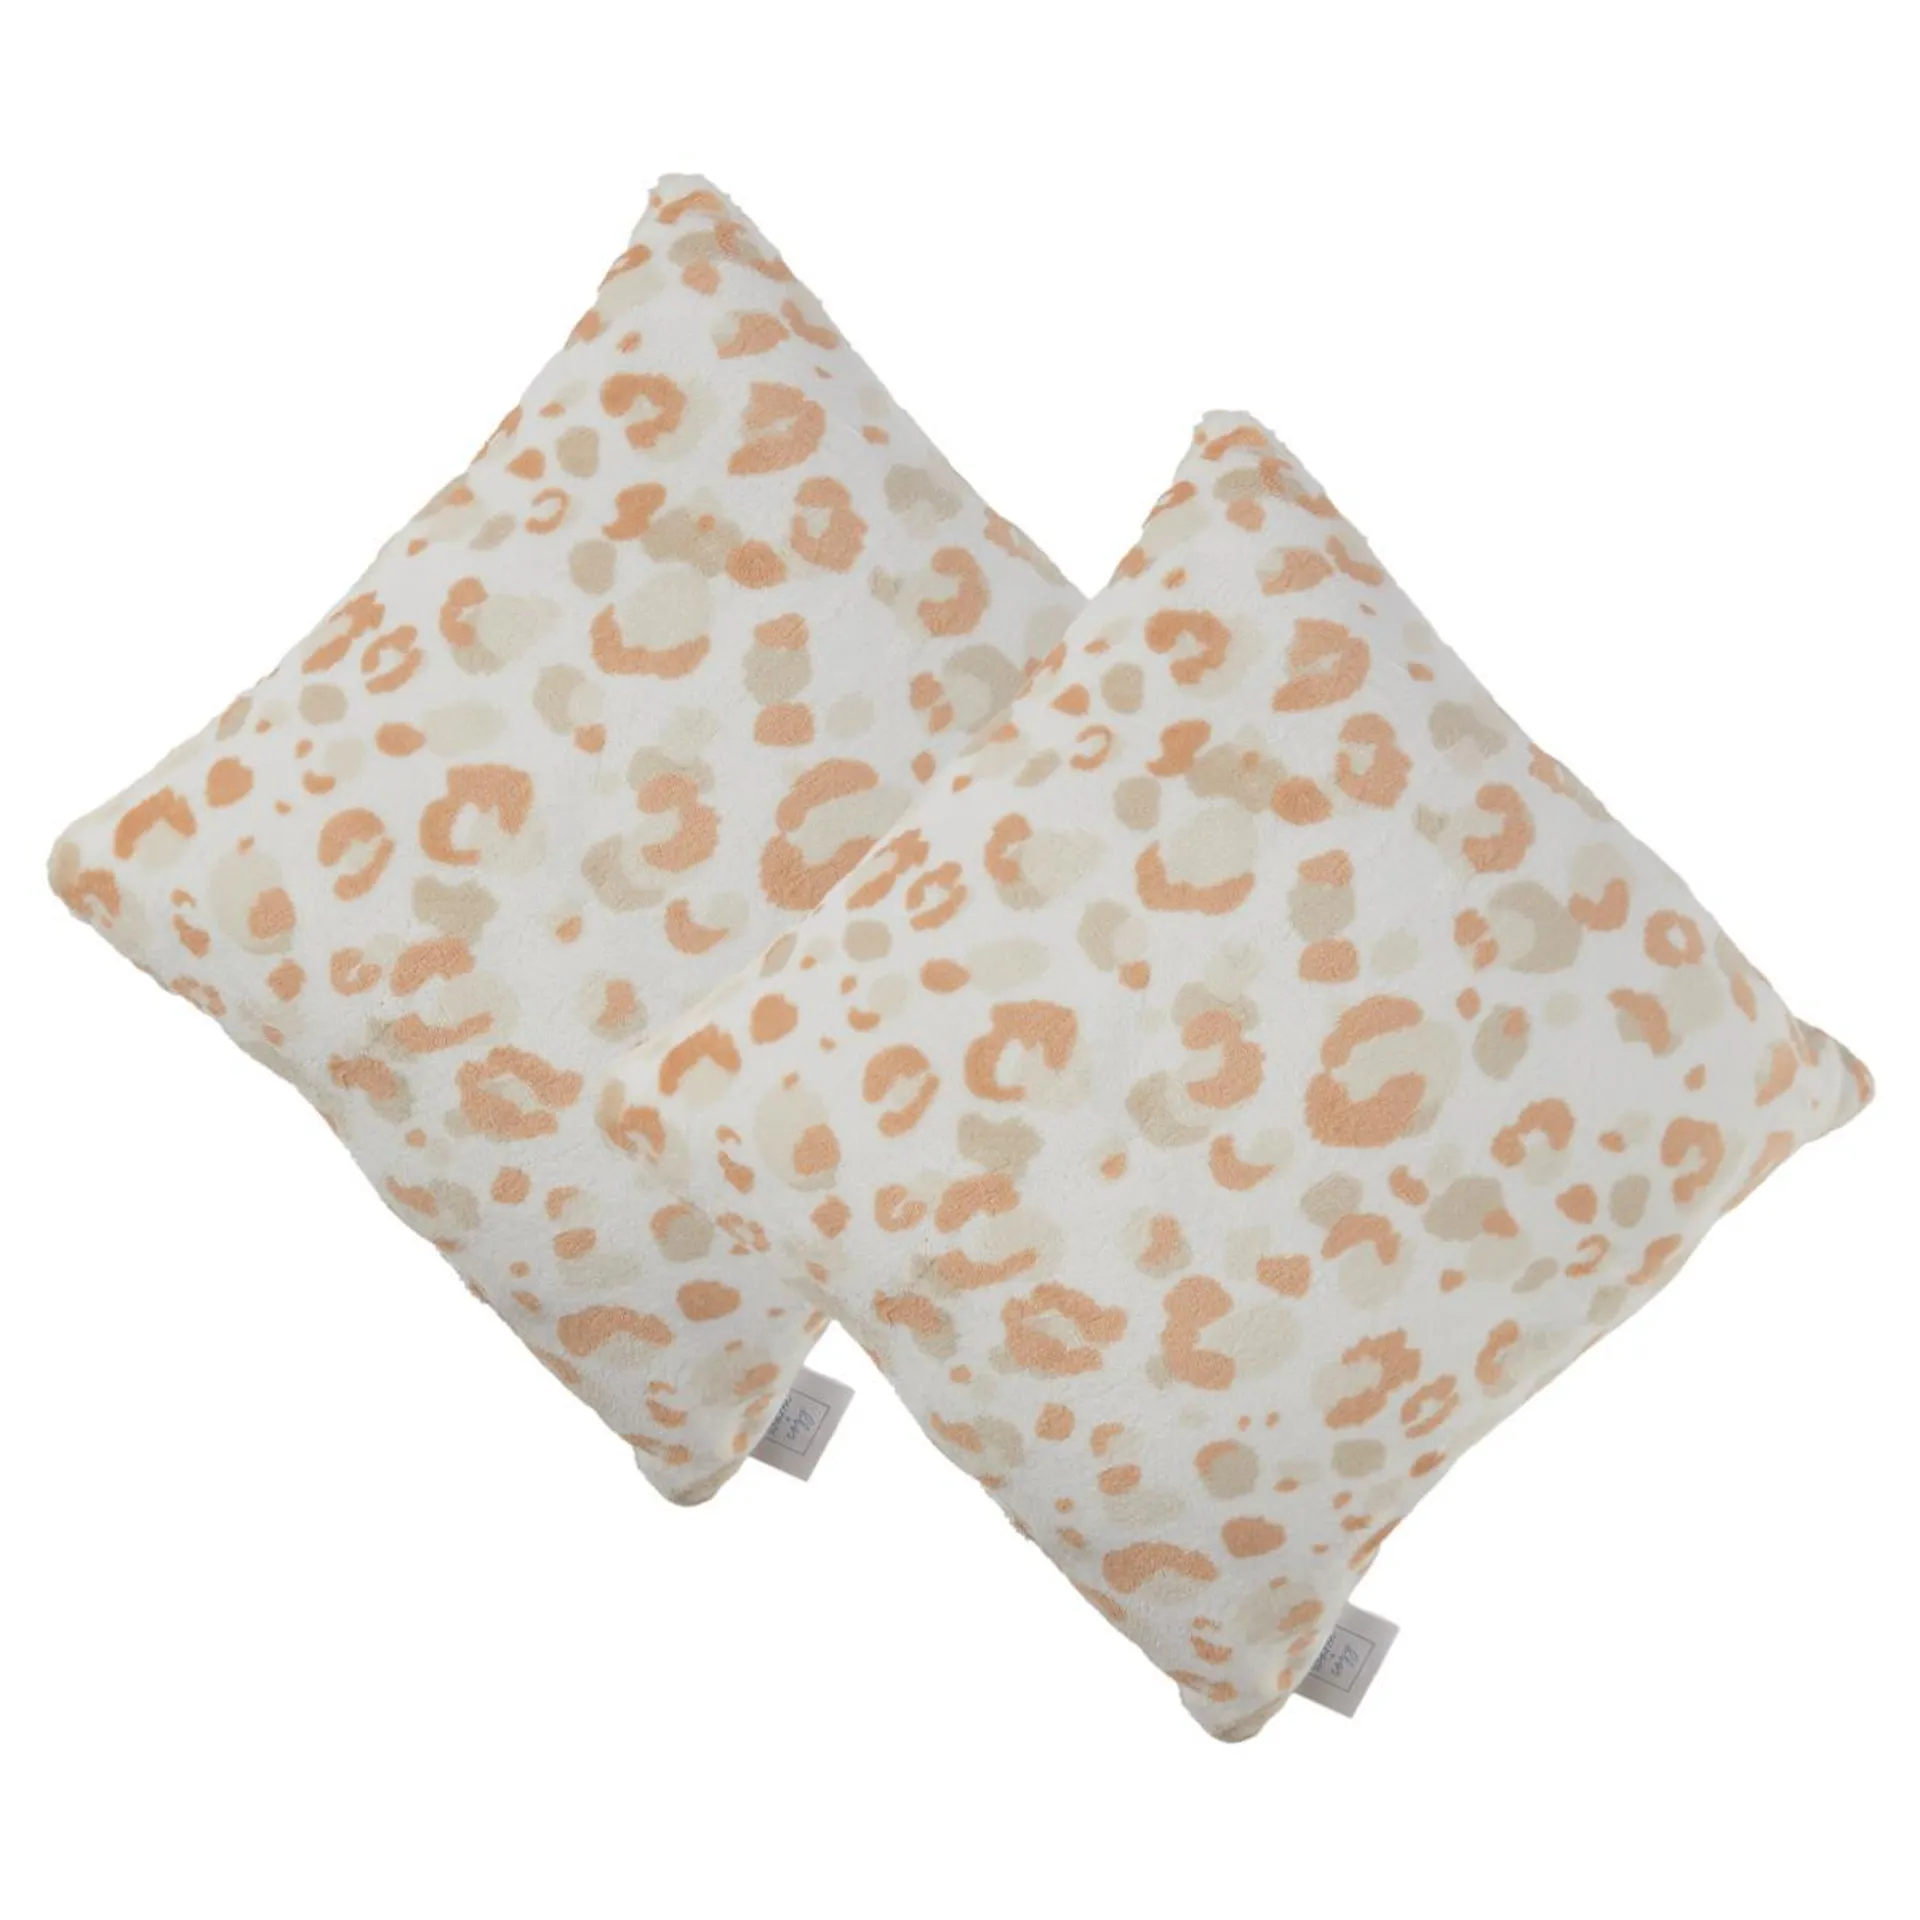 Warm & Cozy Set of 2 18" x 18" Plush-to-Sherpa Decorative Pillows